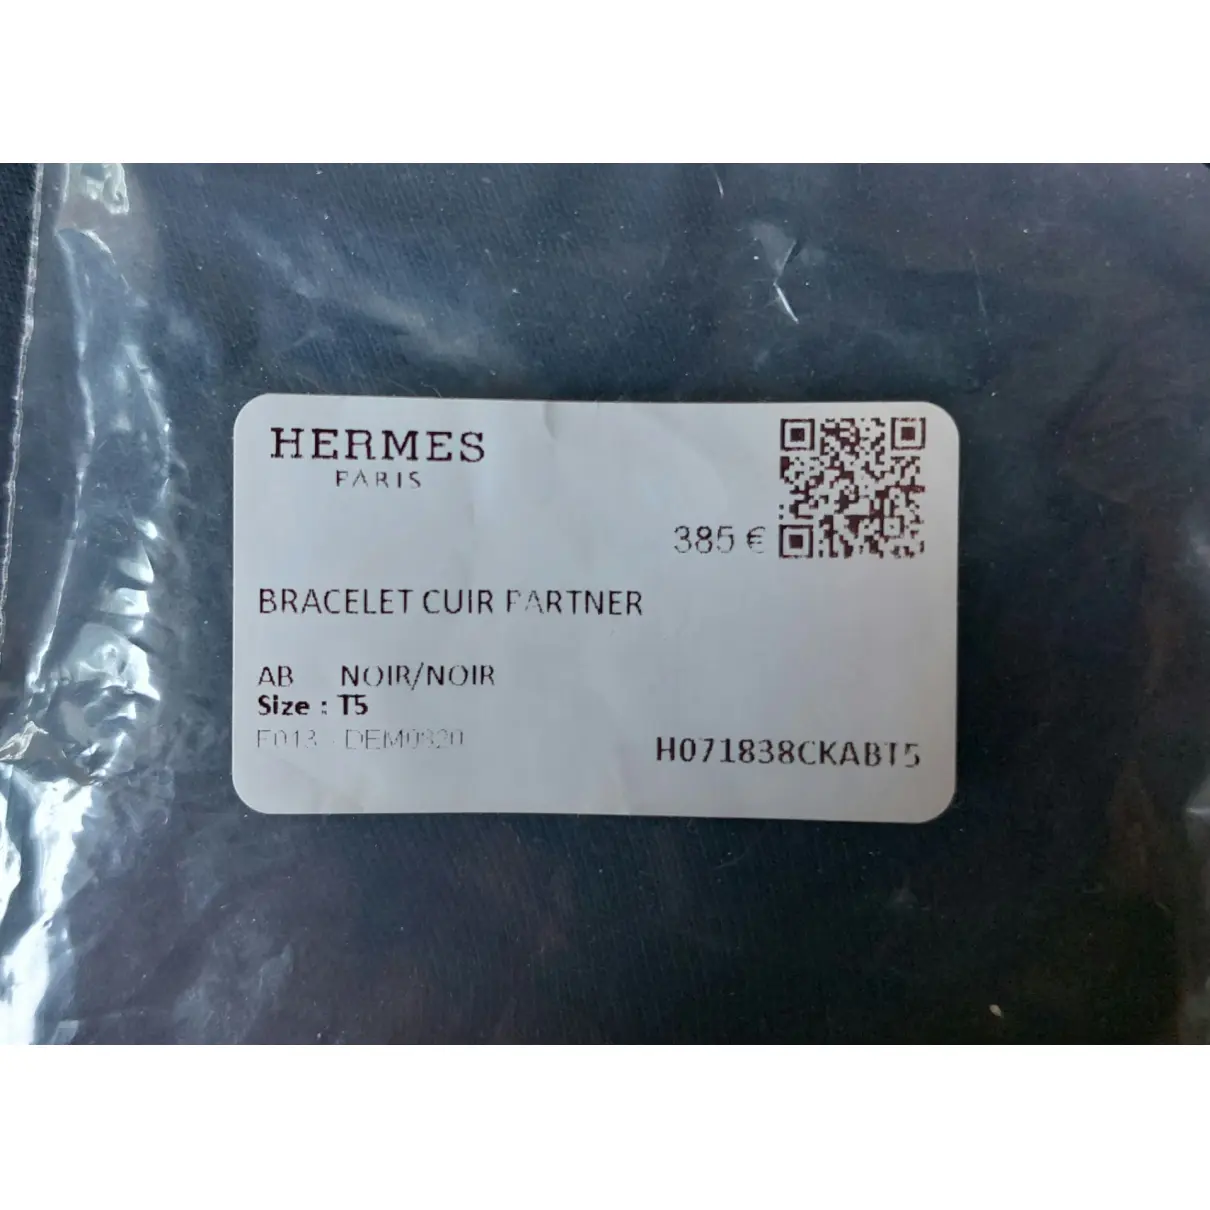 Buy Hermès Leather jewellery online